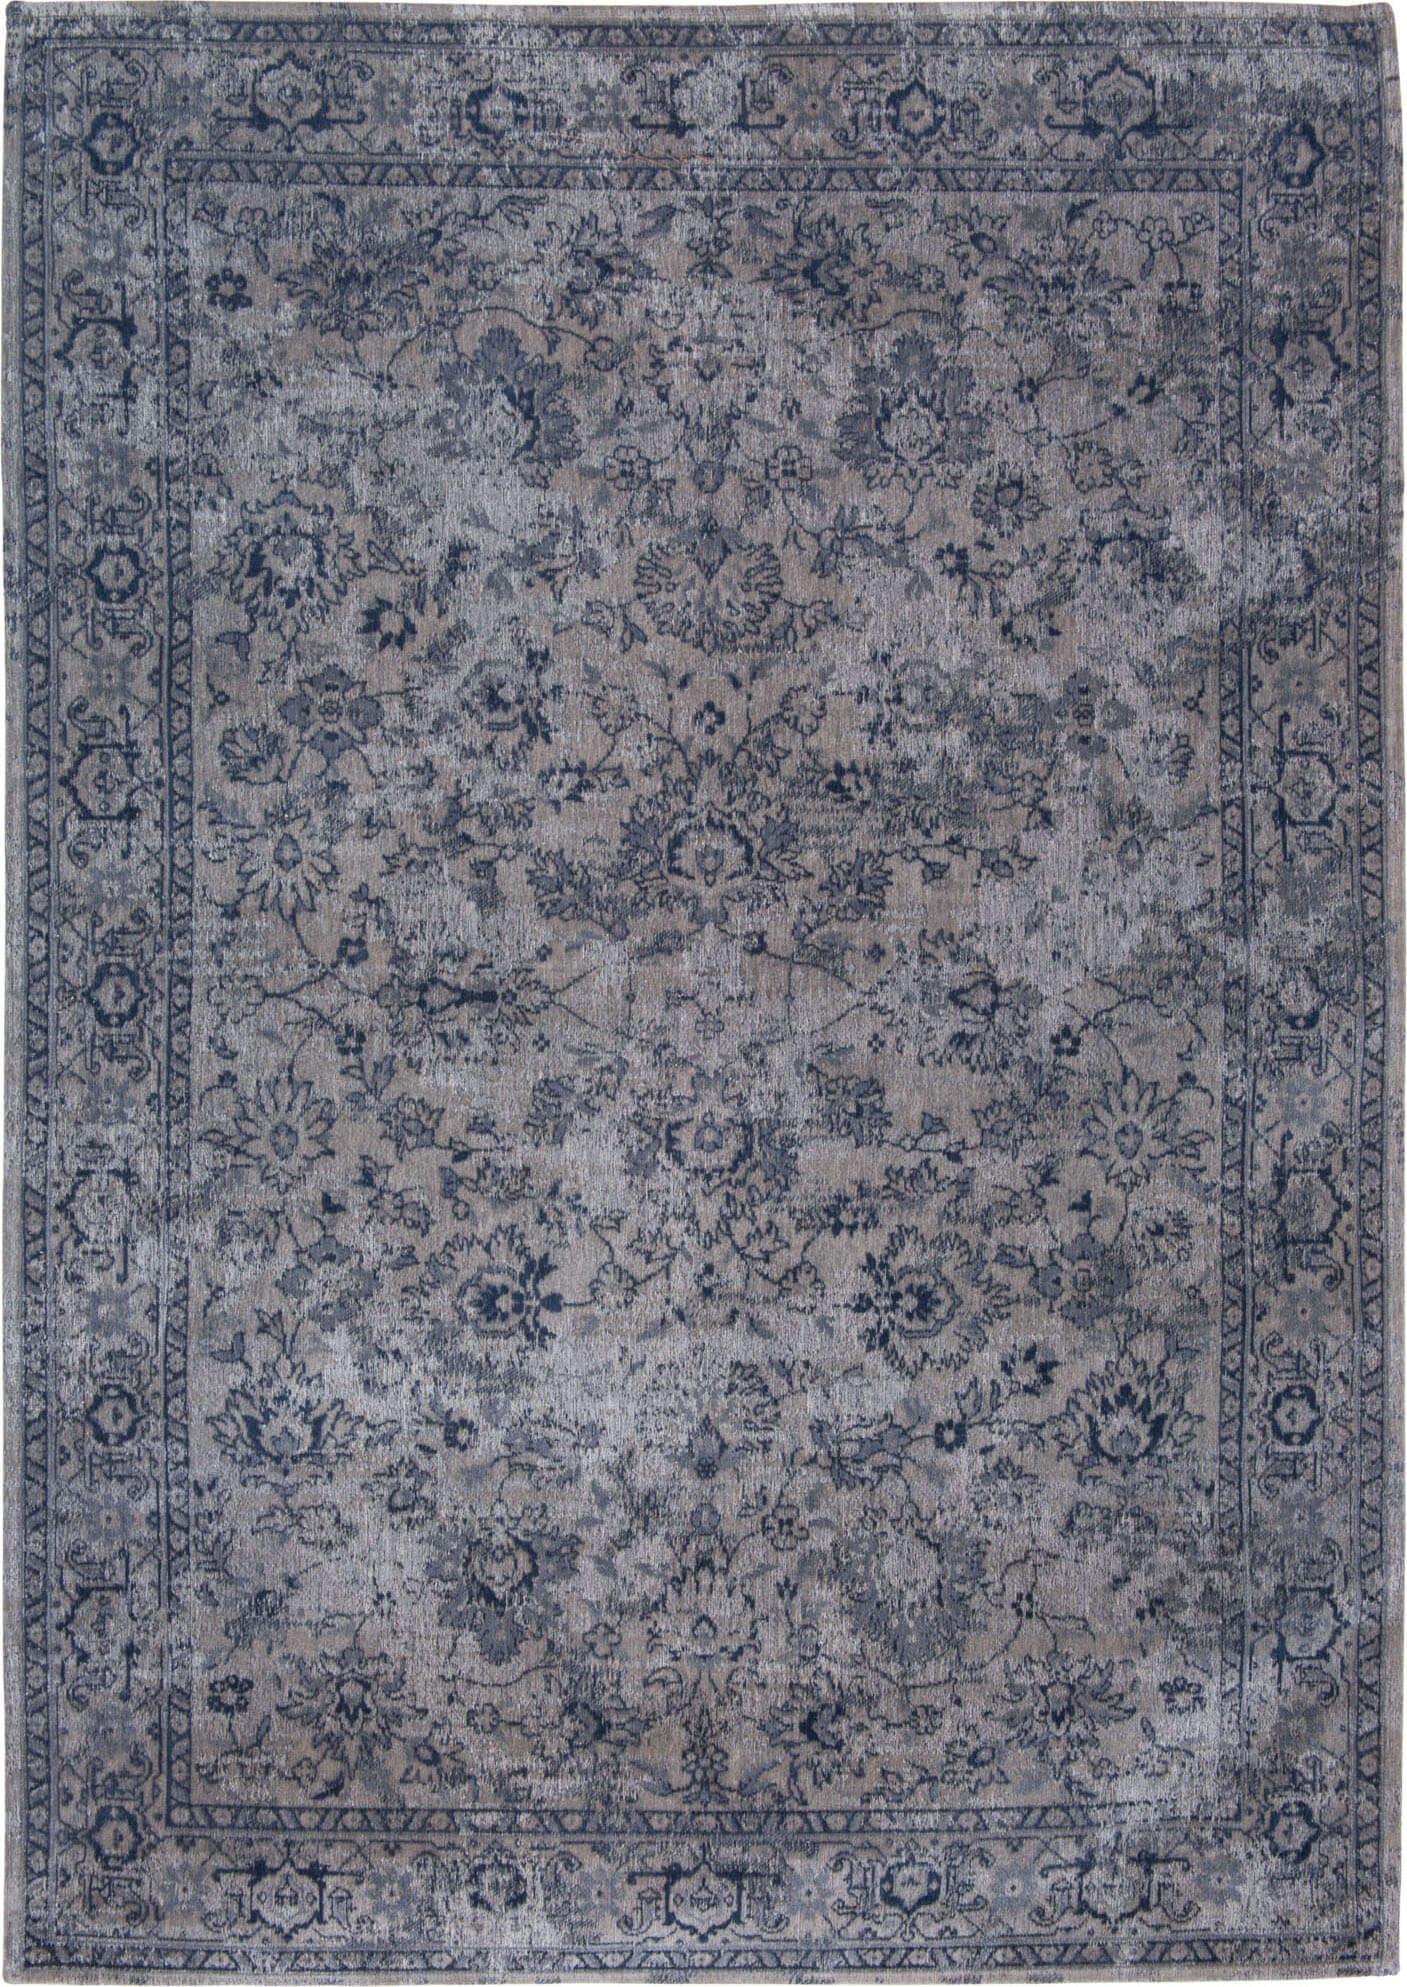 Slate Blue Bright Persian Vintage Rug ☞ Size: 280 x 360 cm